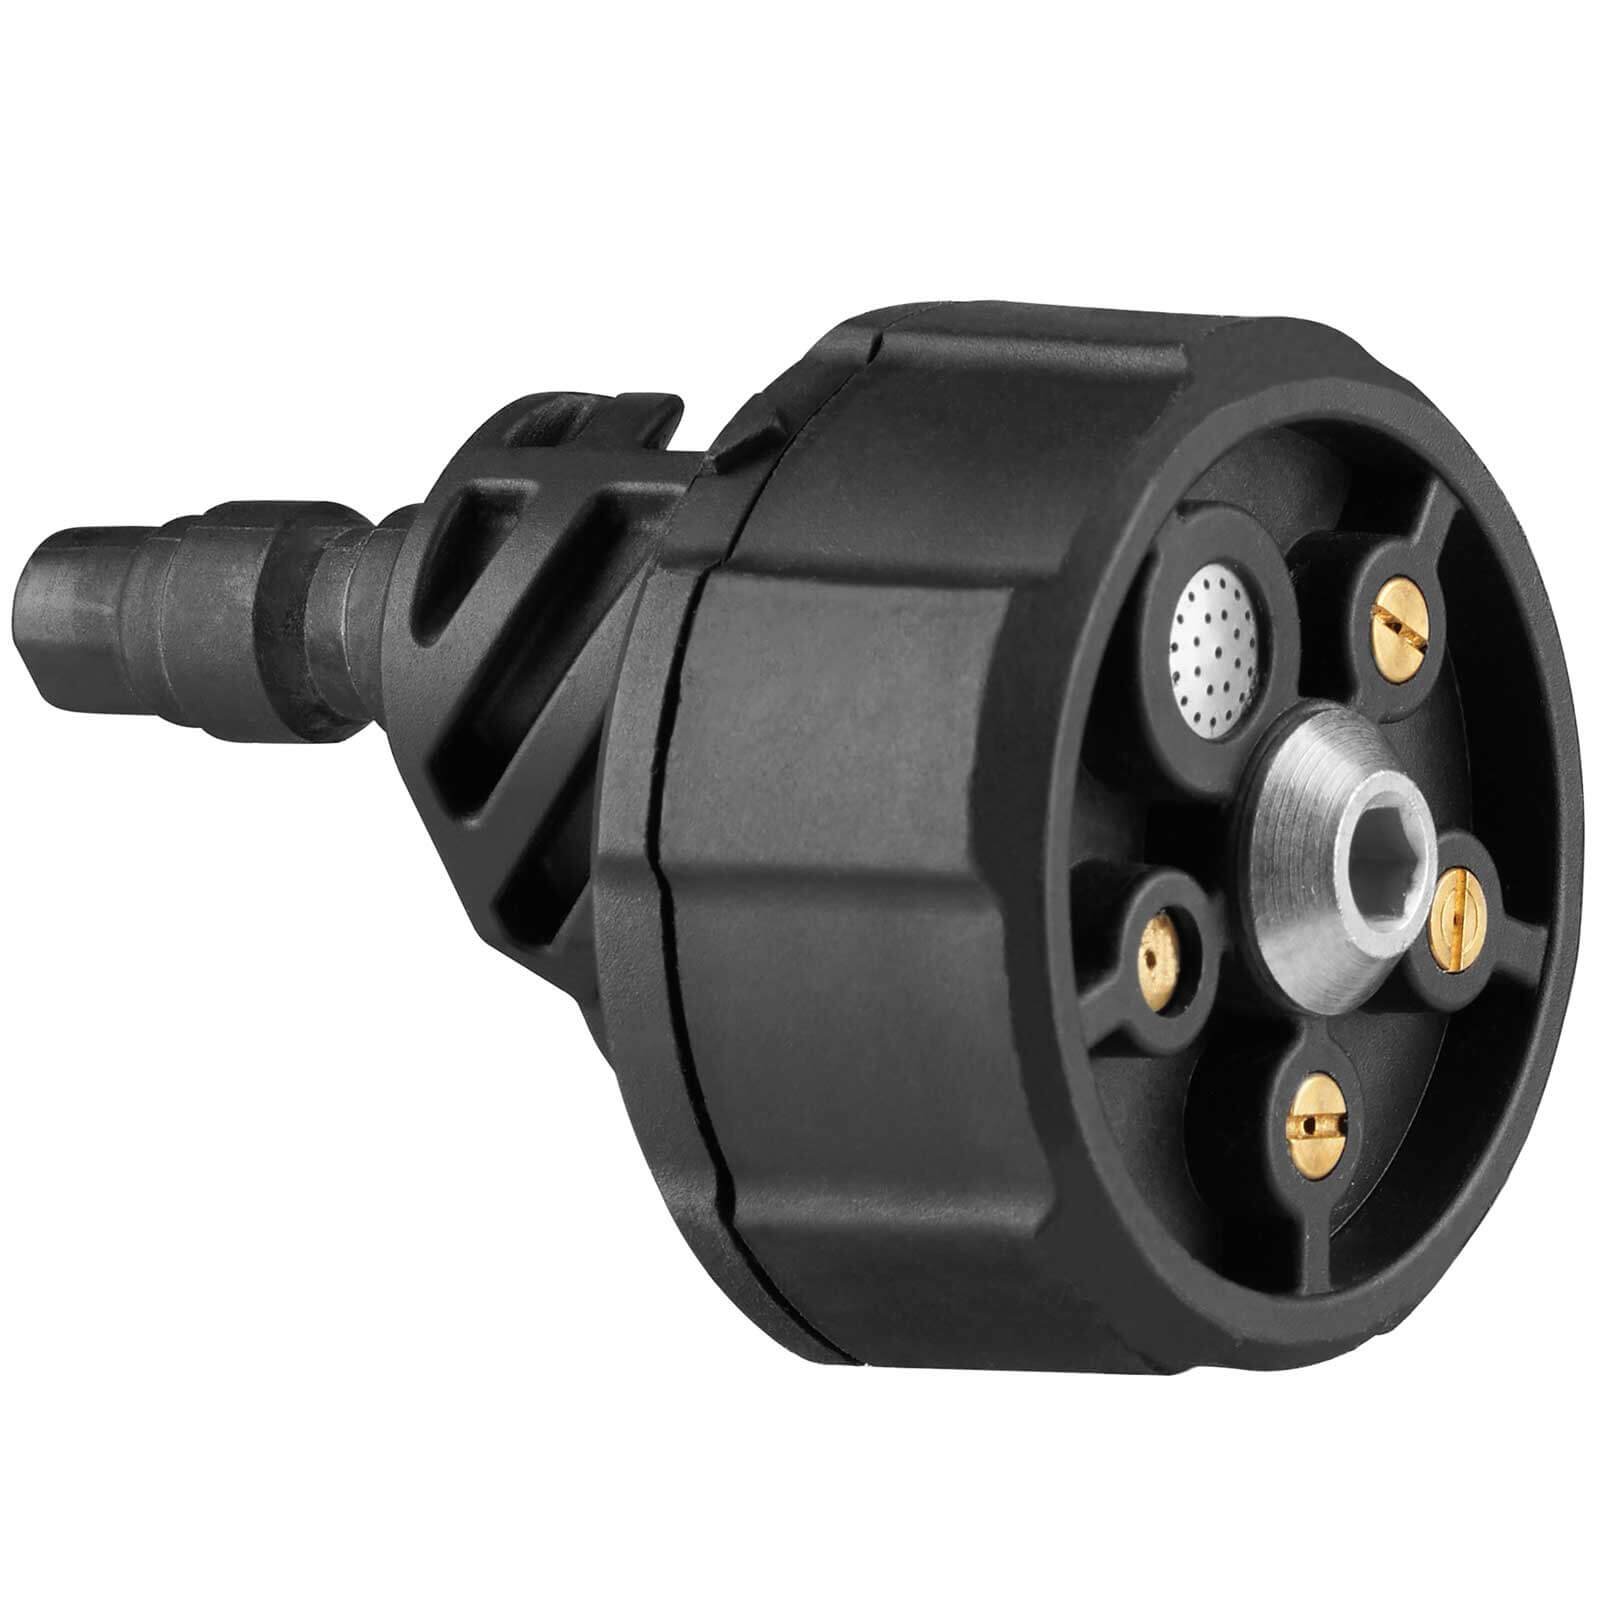 Black and Decker Pressure Washer - 5In1 Nozzle